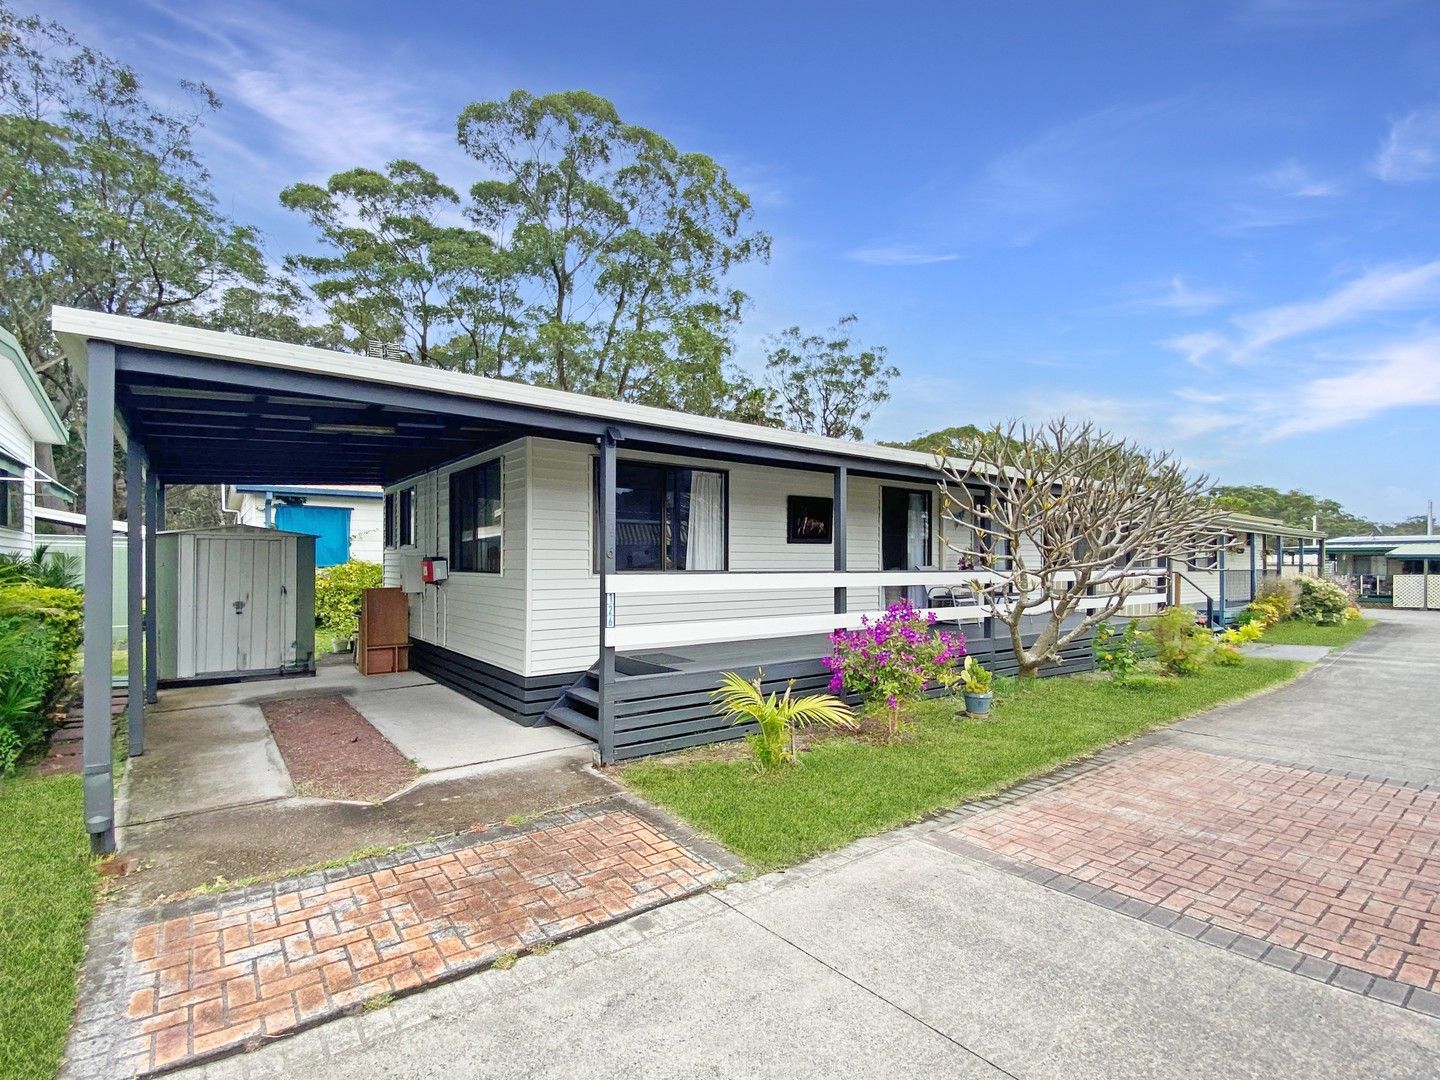 2 bedrooms Villa in 126/2 Evans Road CANTON BEACH NSW, 2263